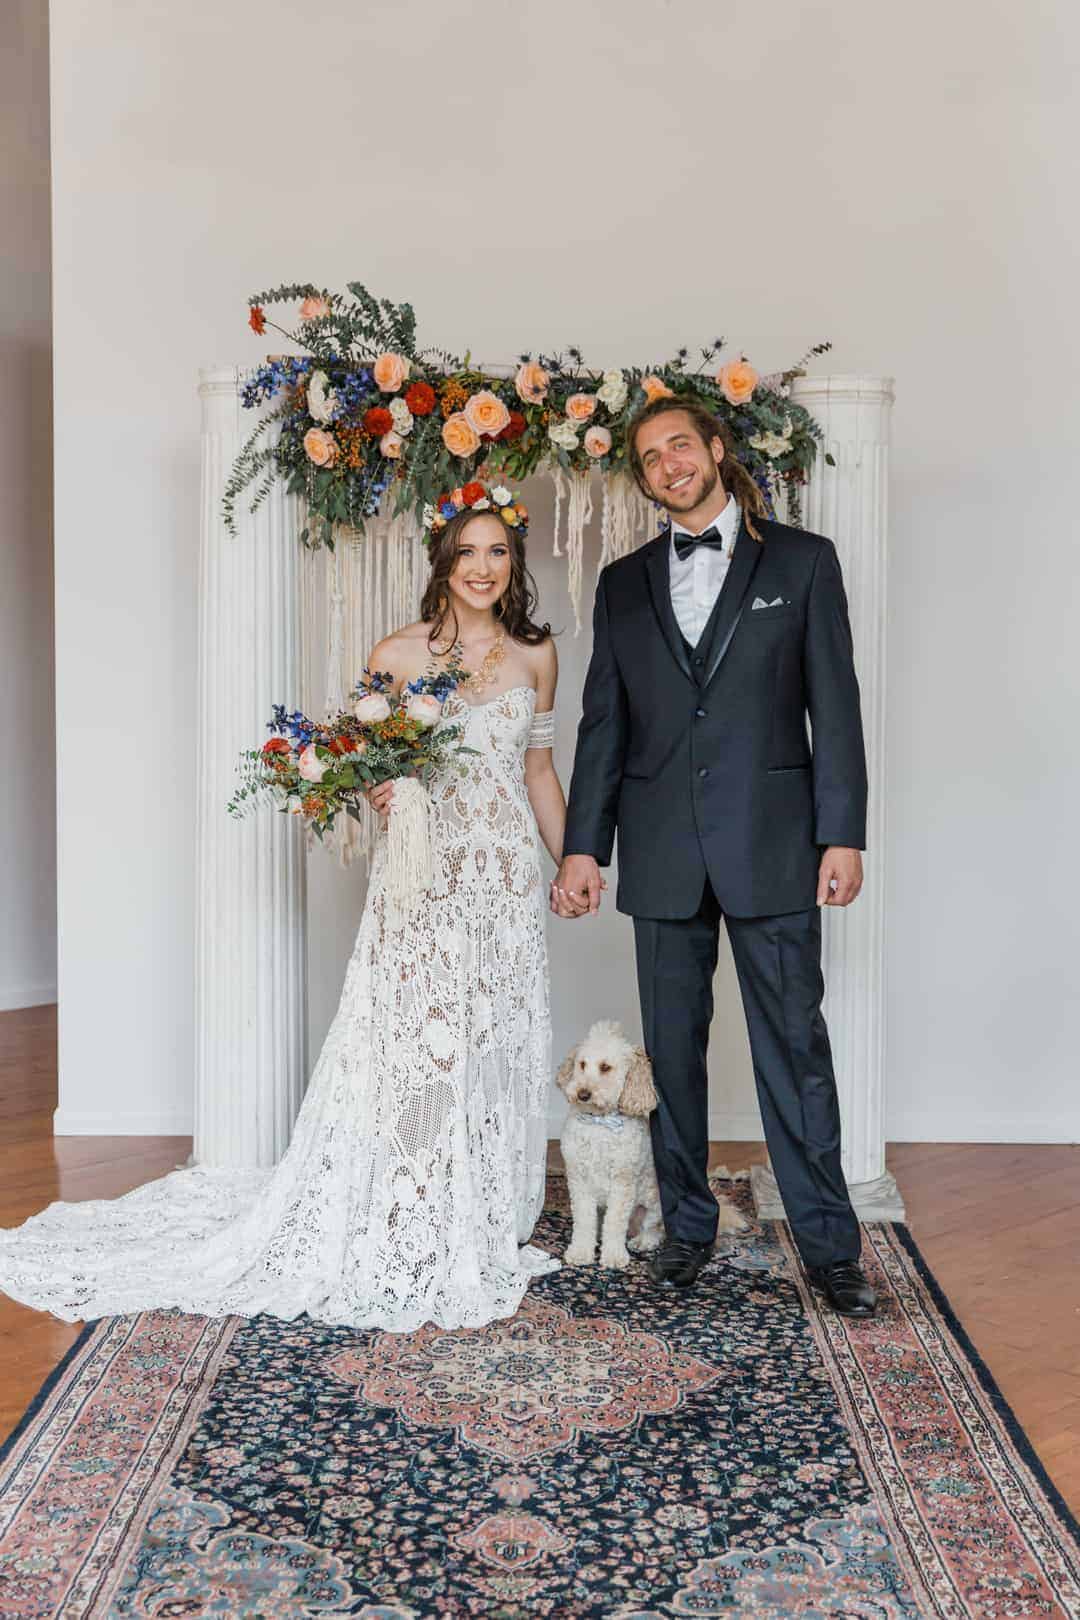 Rachel Photographs | Vows that Wow - Oklahoma Wedding - Elisa and John